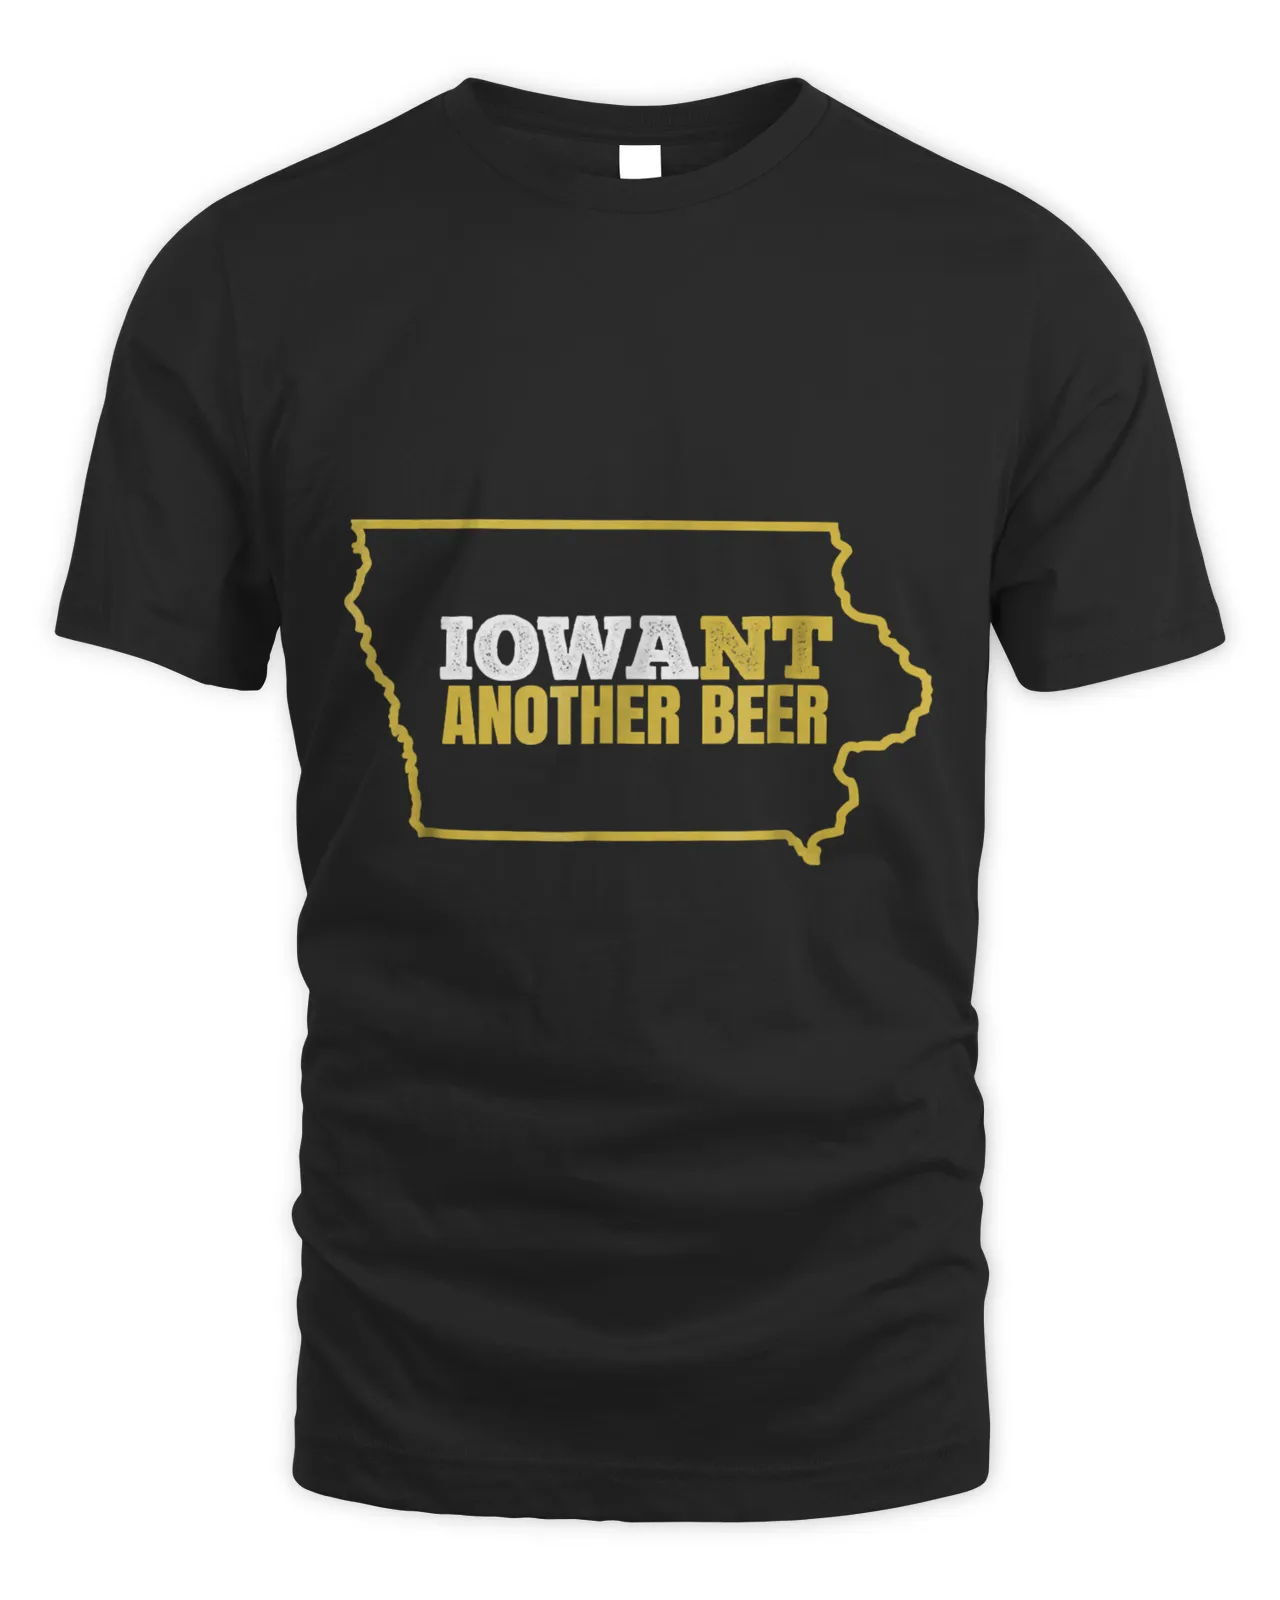 Iowa Beer Tshirts Distressed Iowa State Map T-Shirt